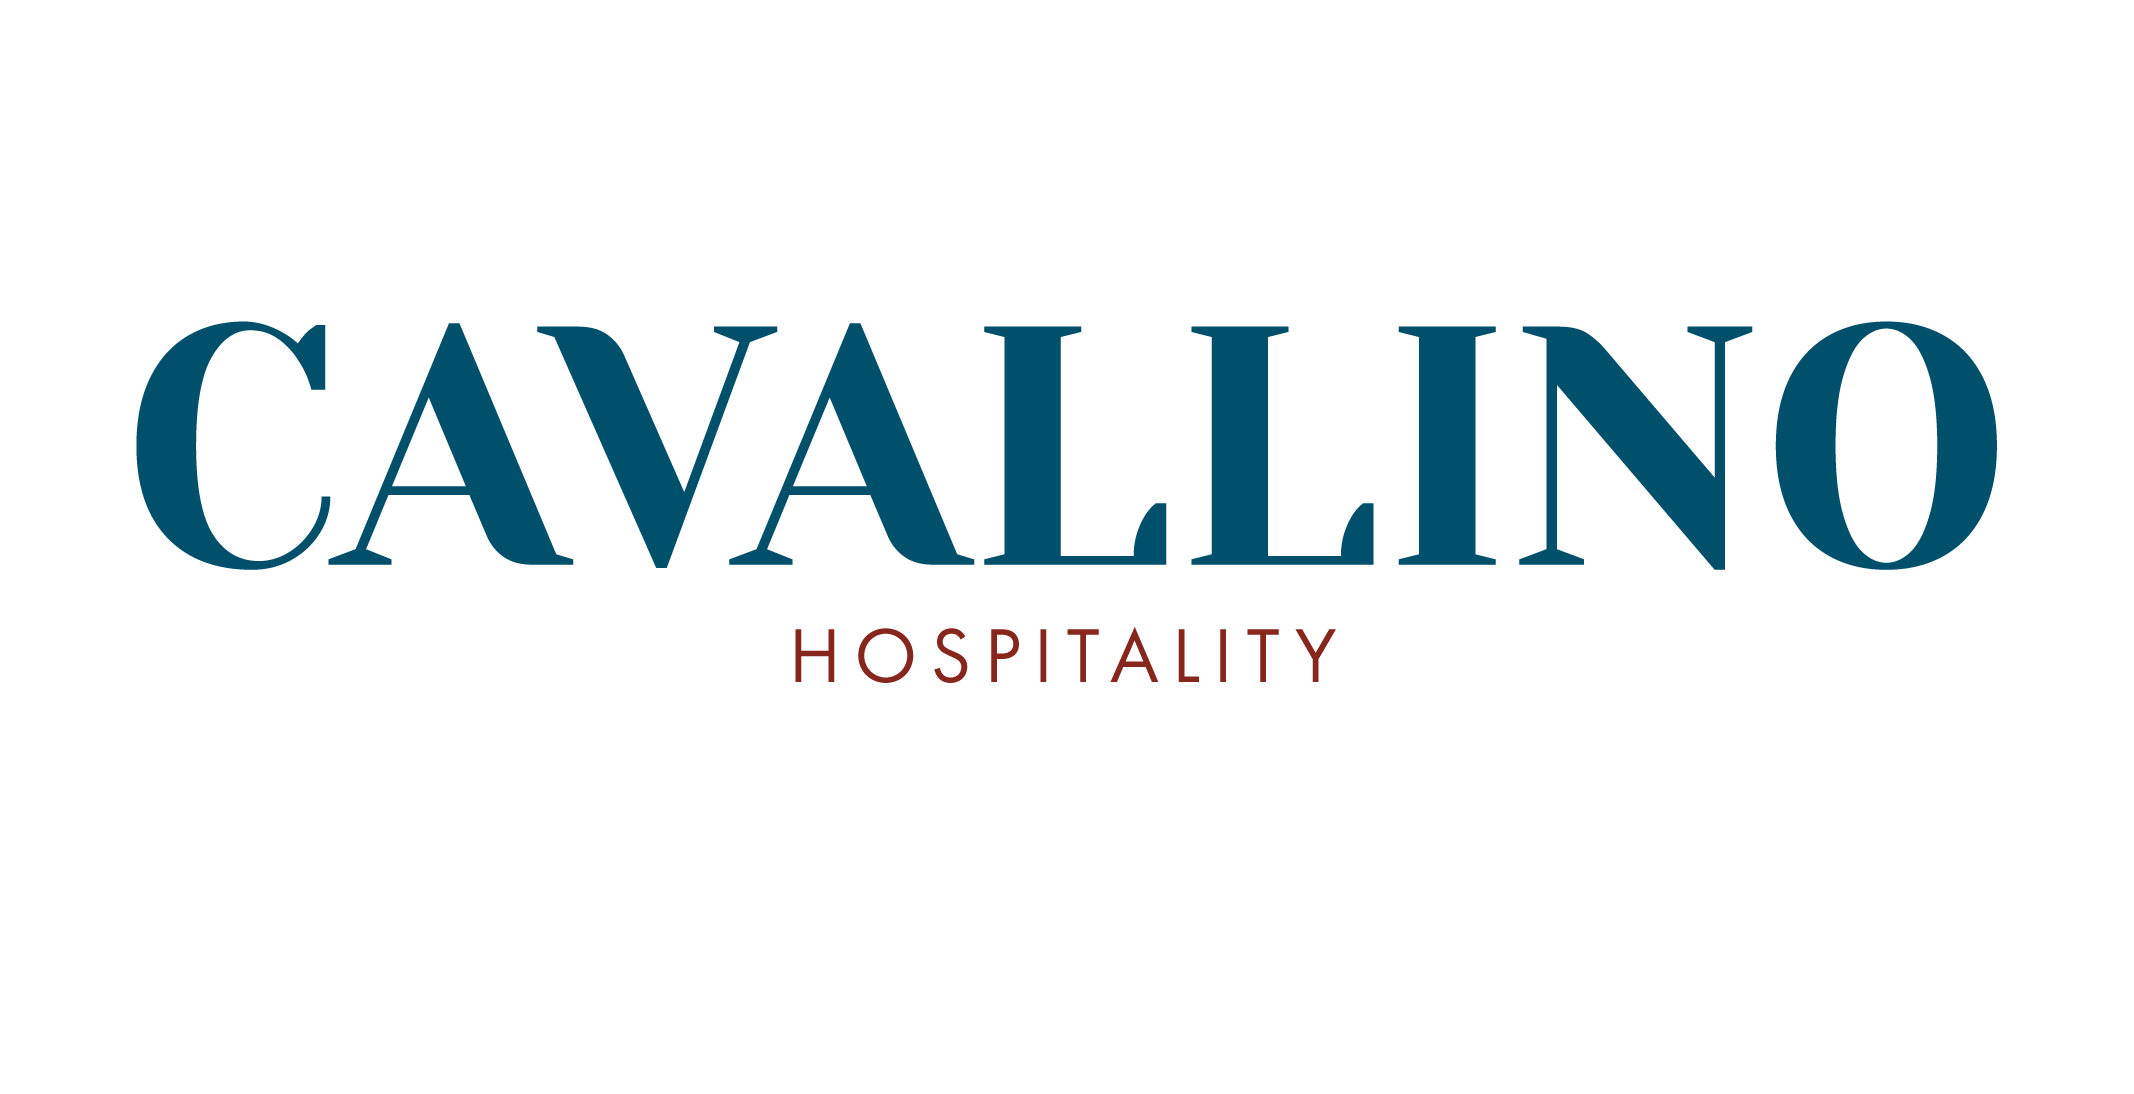 Cavallino Hospitality